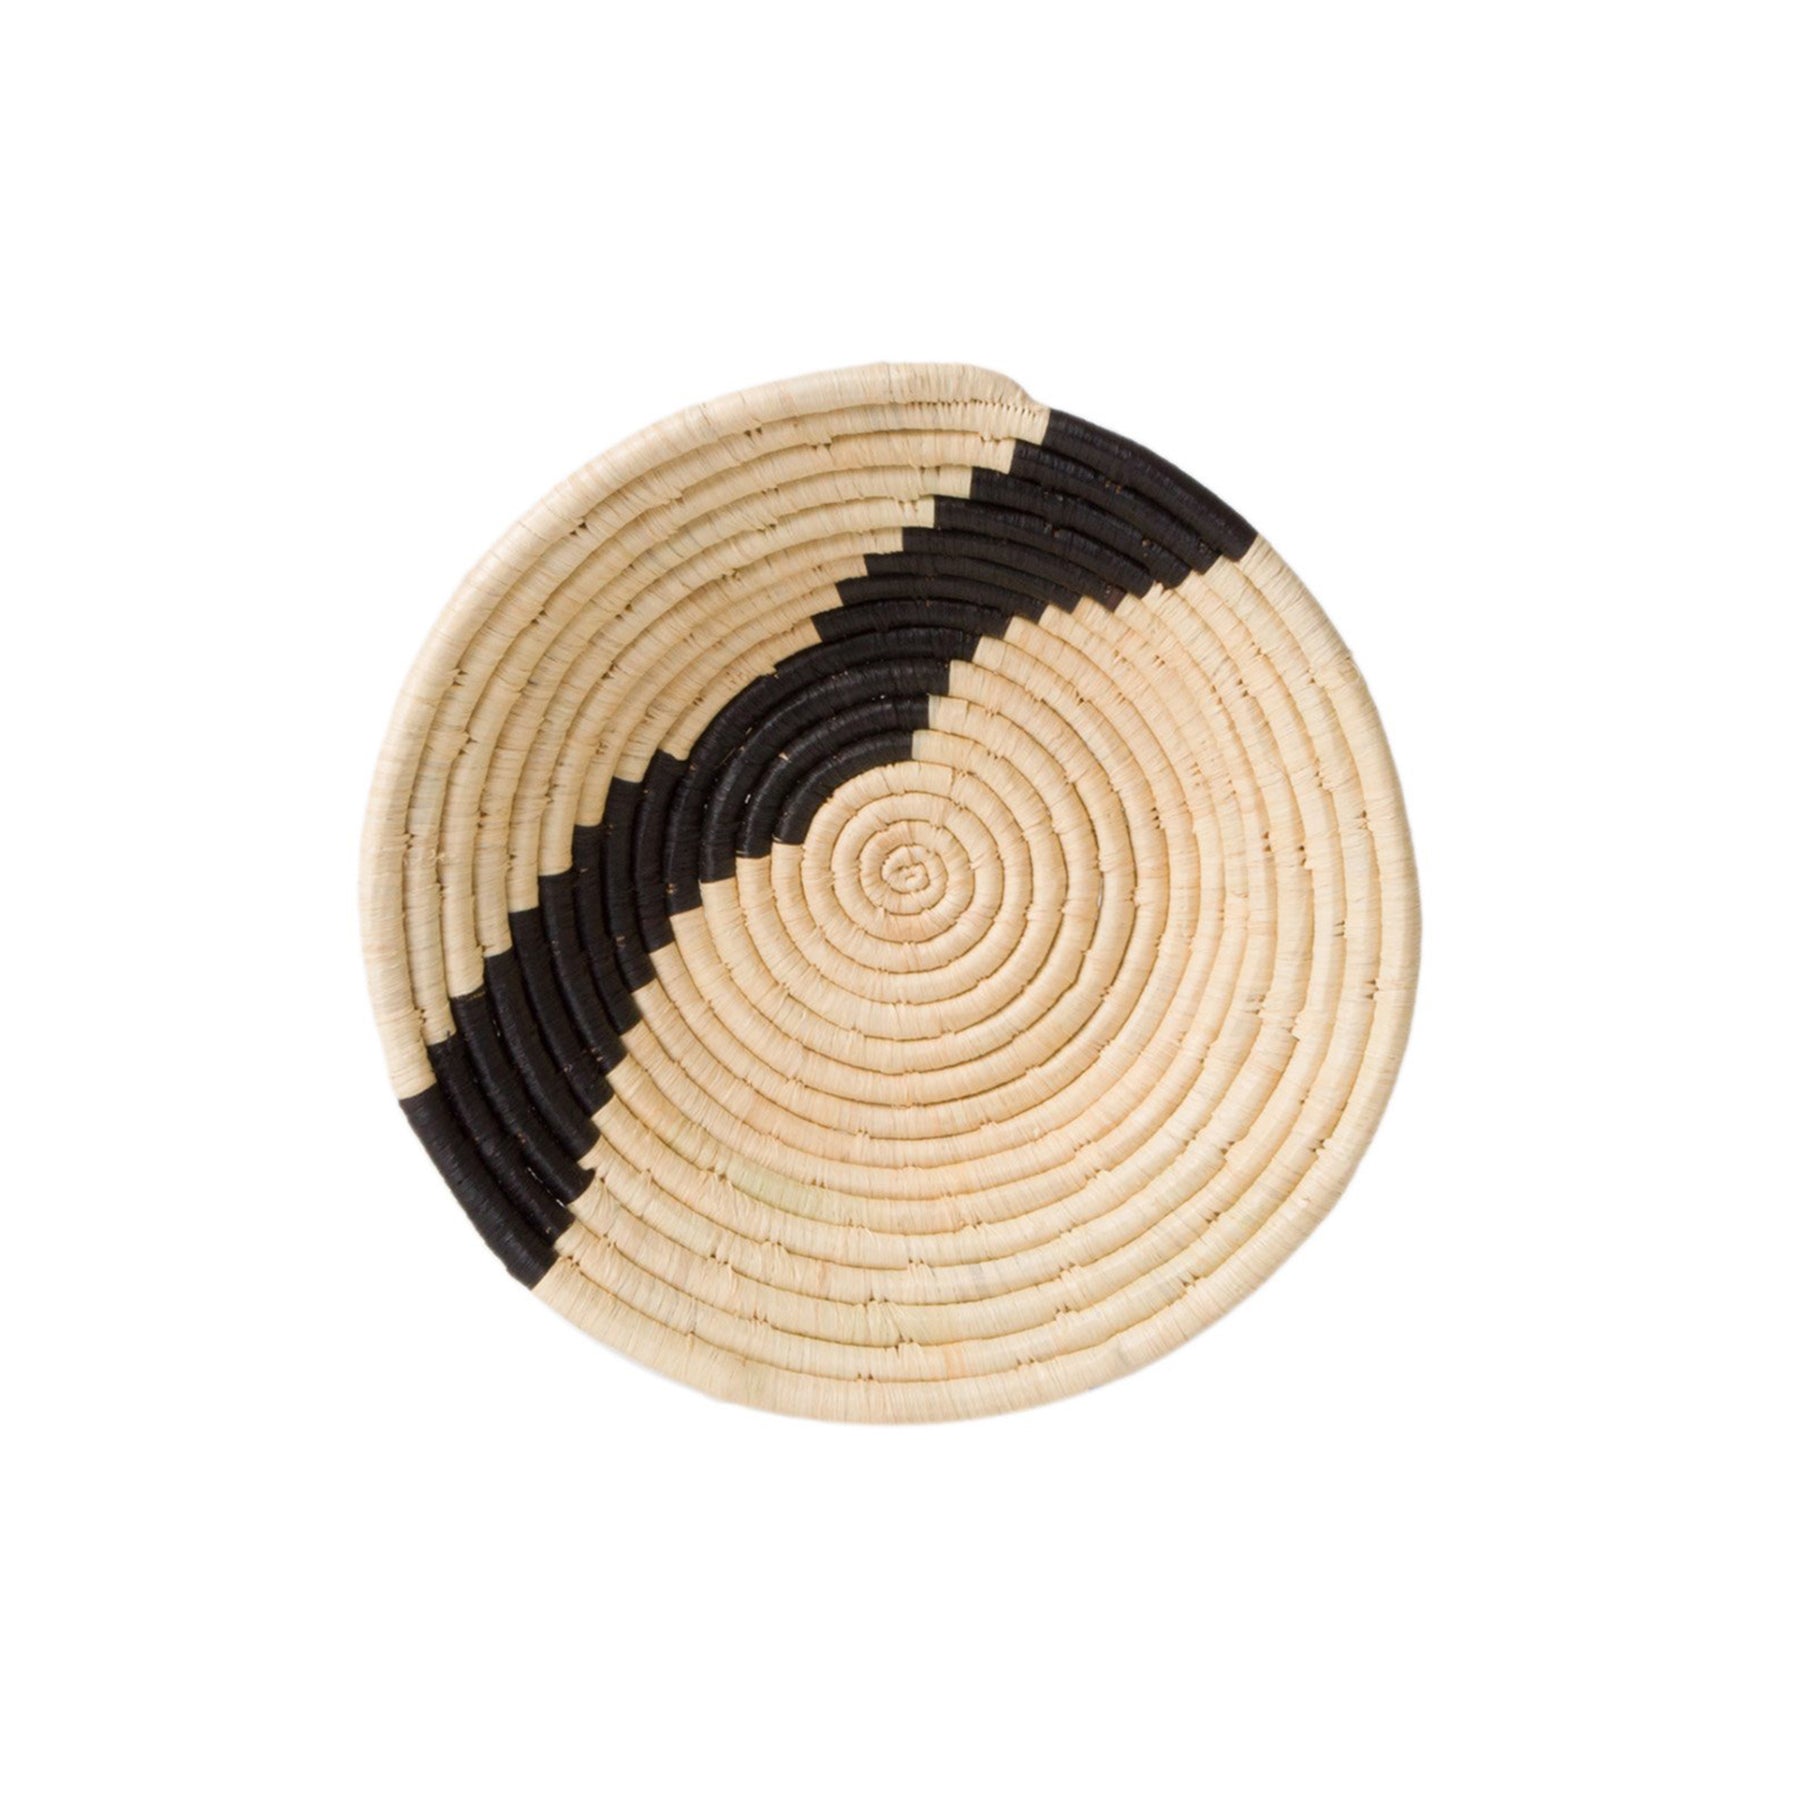 10" Medium Striped Black & Natural Round Basket